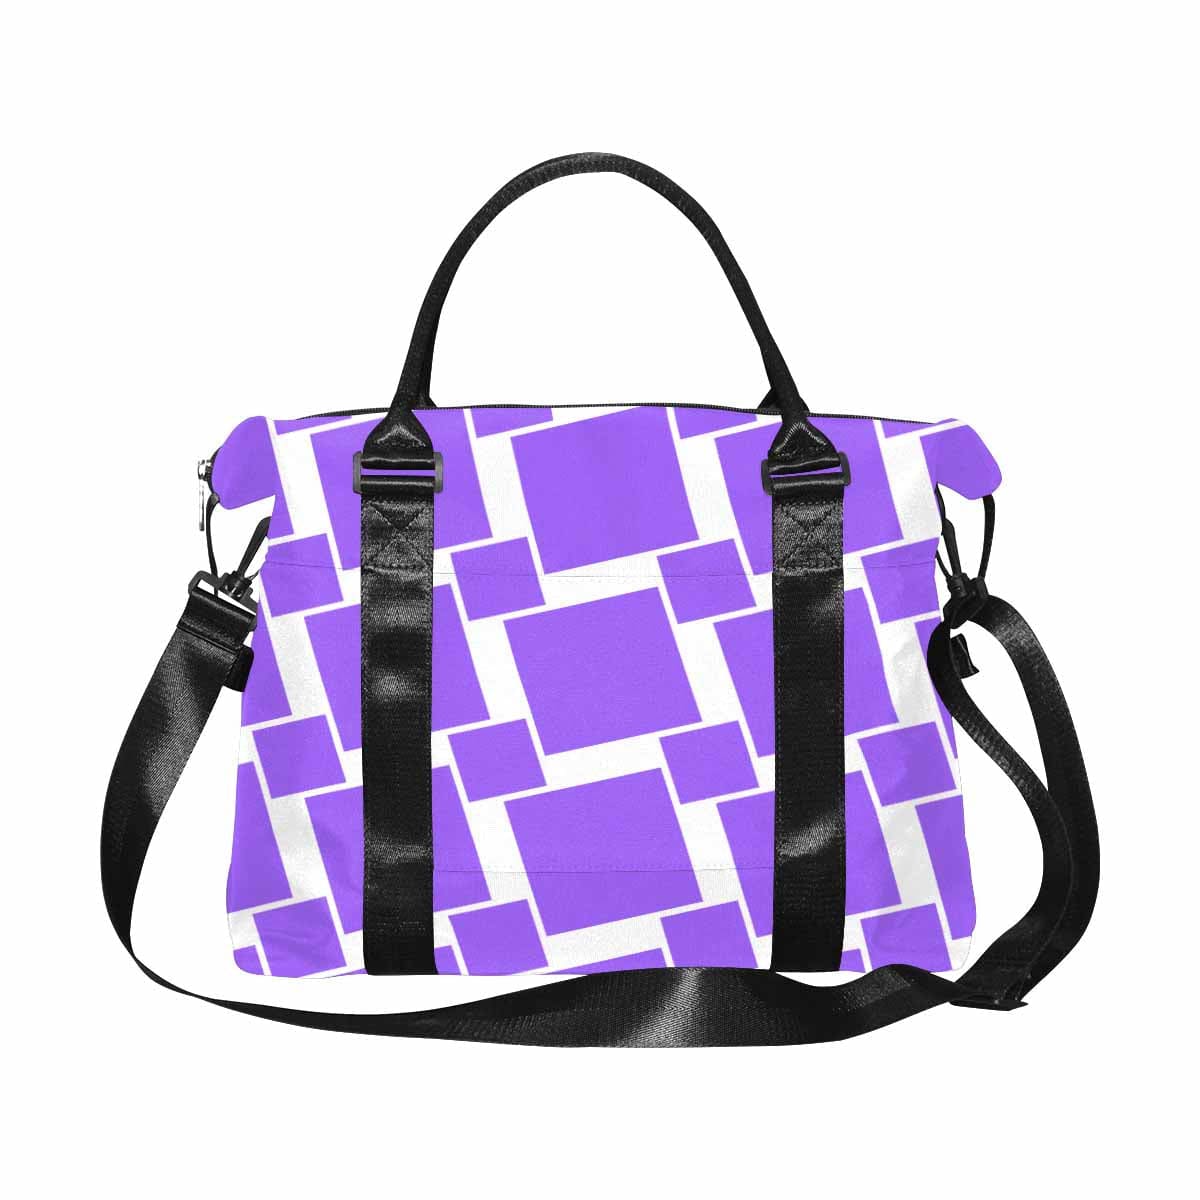 Duffle Bag - Large Capacity - Lavendar - Bags | Travel Bags | Canvas Carry